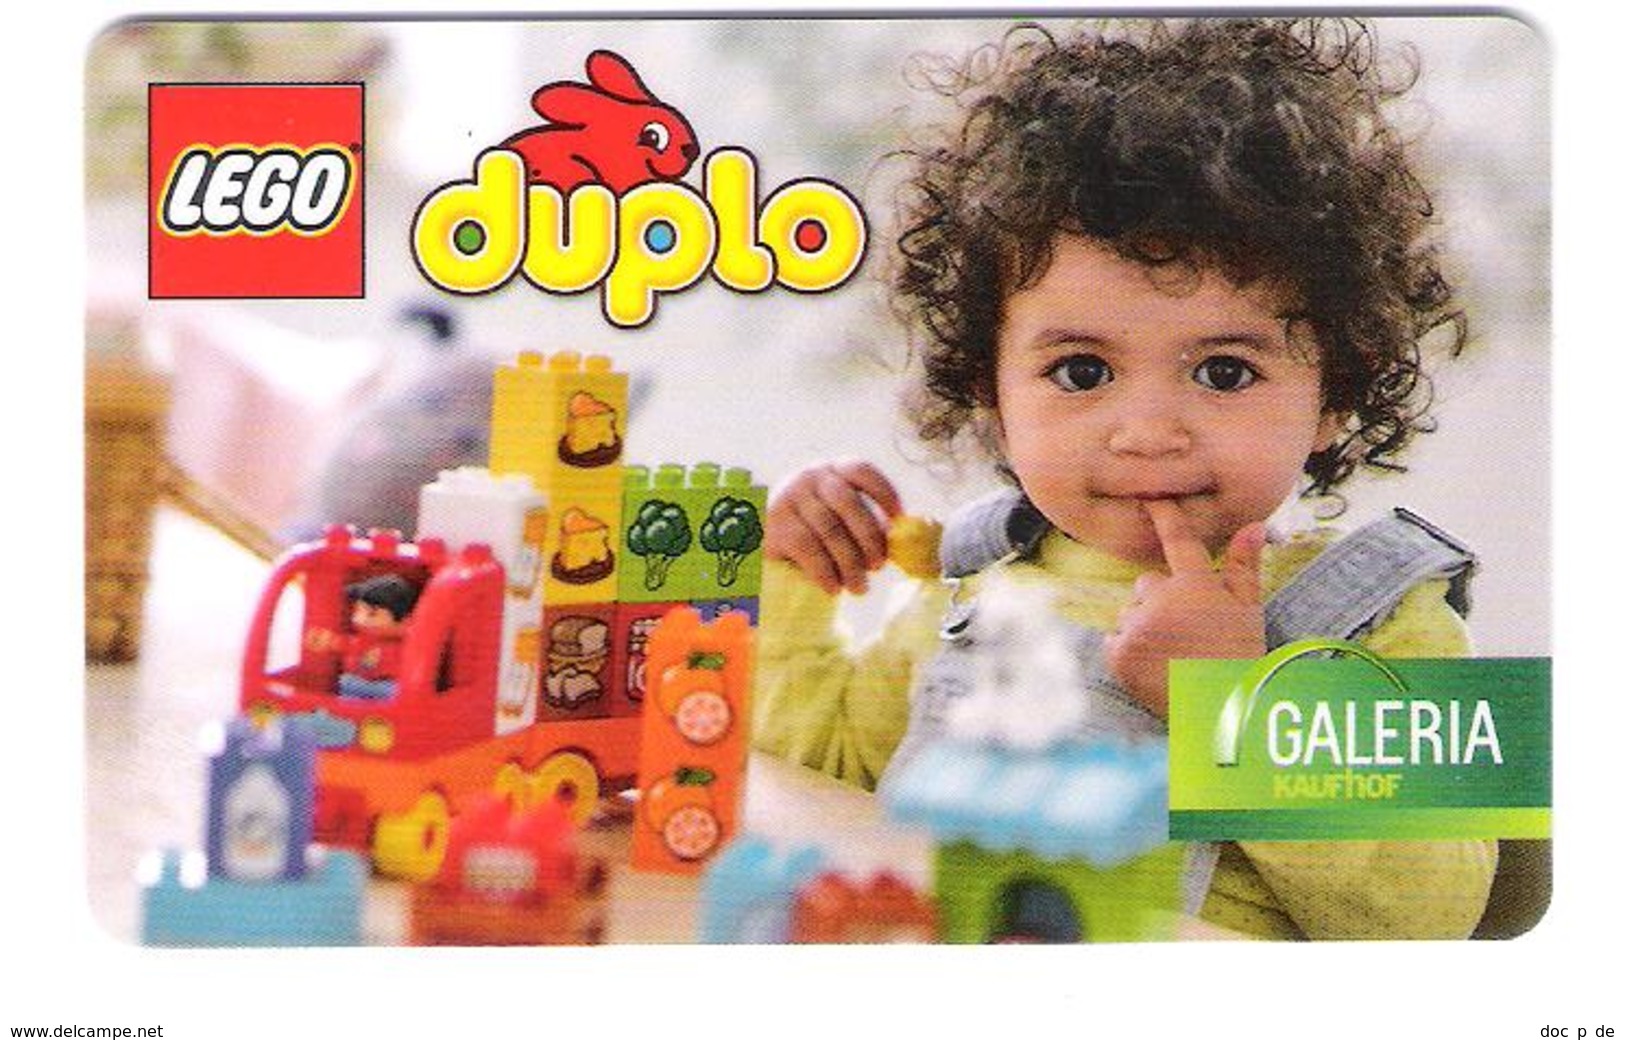 Germany - Allemagne - Galeria - Lego - Duplo - Carte Cadeau - Carta Regalo - Gift Card - Geschenkkarte - Gift Cards